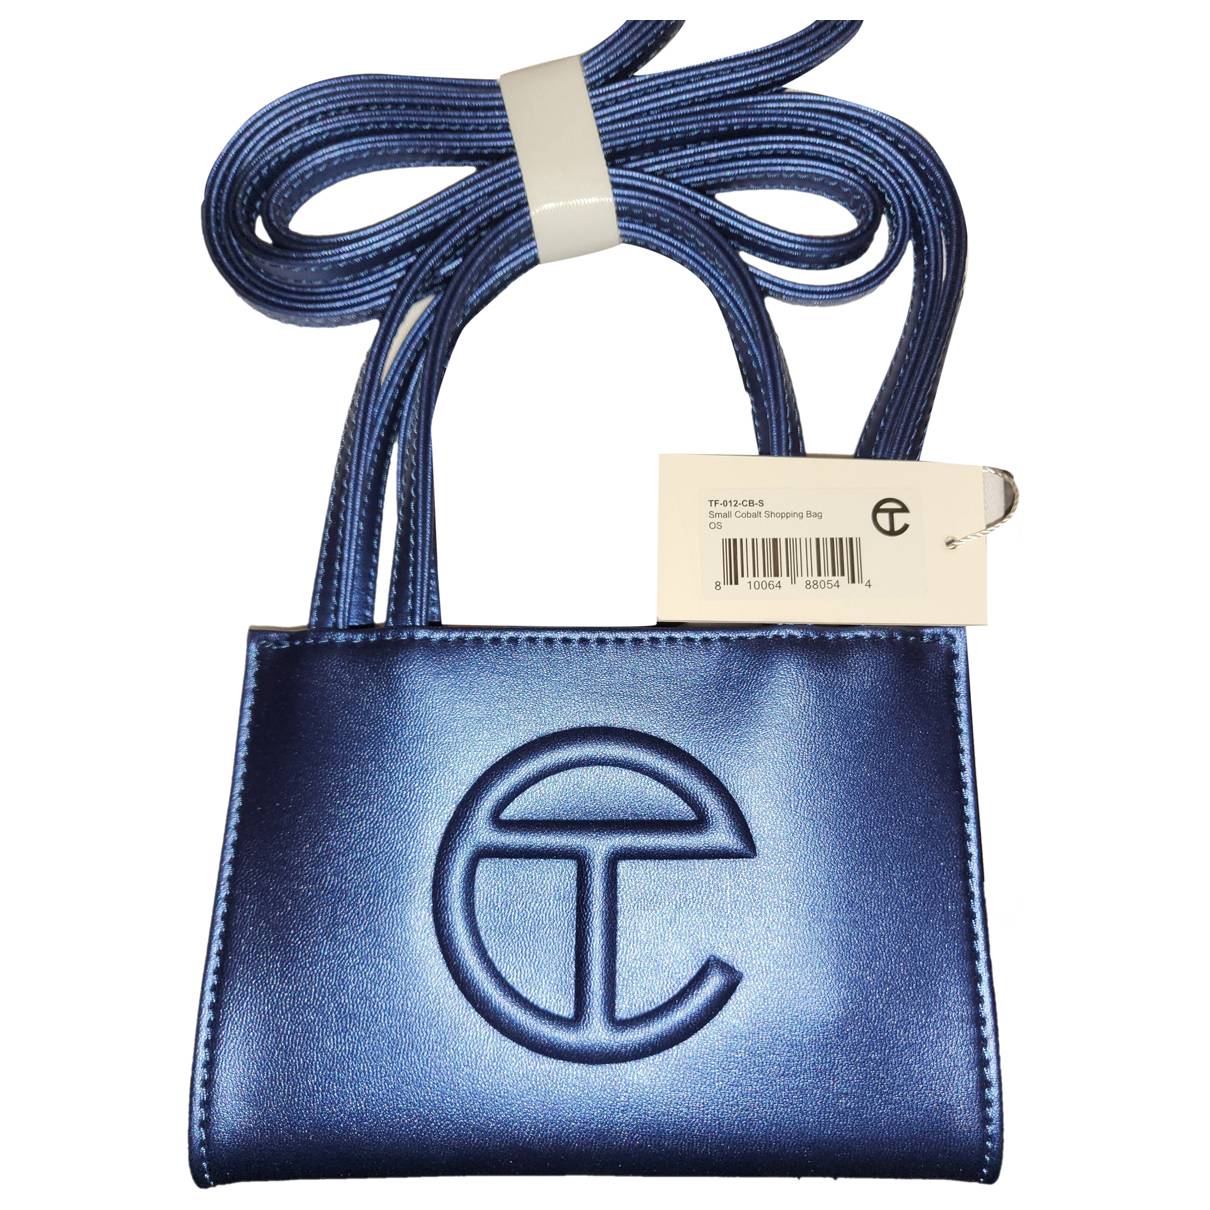 Small shopping bag vegan leather tote Telfar Blue in Vegan leather